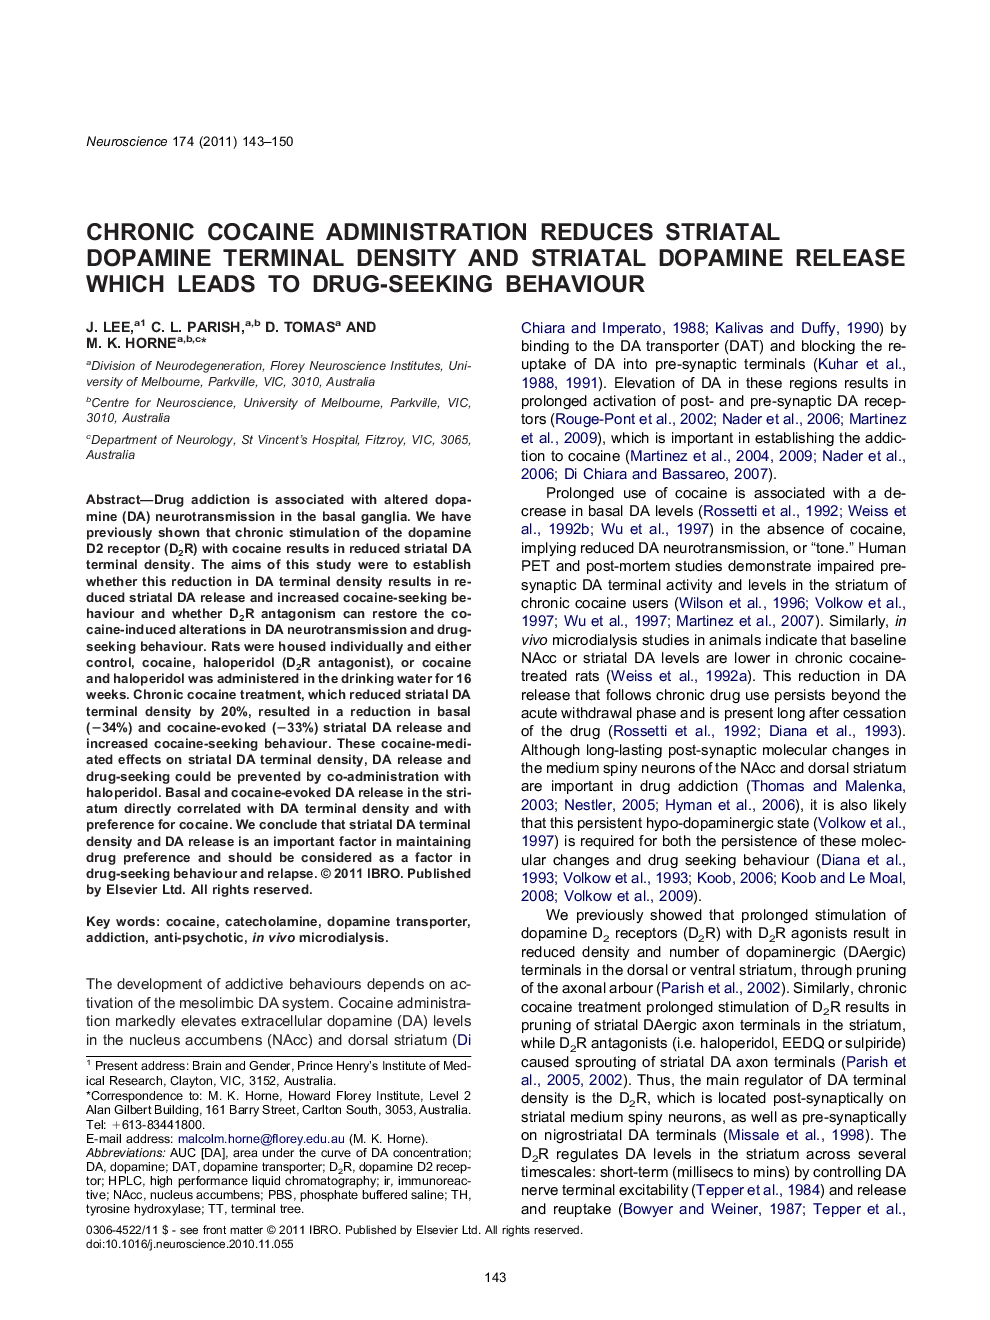 Chronic cocaine administration reduces striatal dopamine terminal density and striatal dopamine release which leads to drug-seeking behaviour